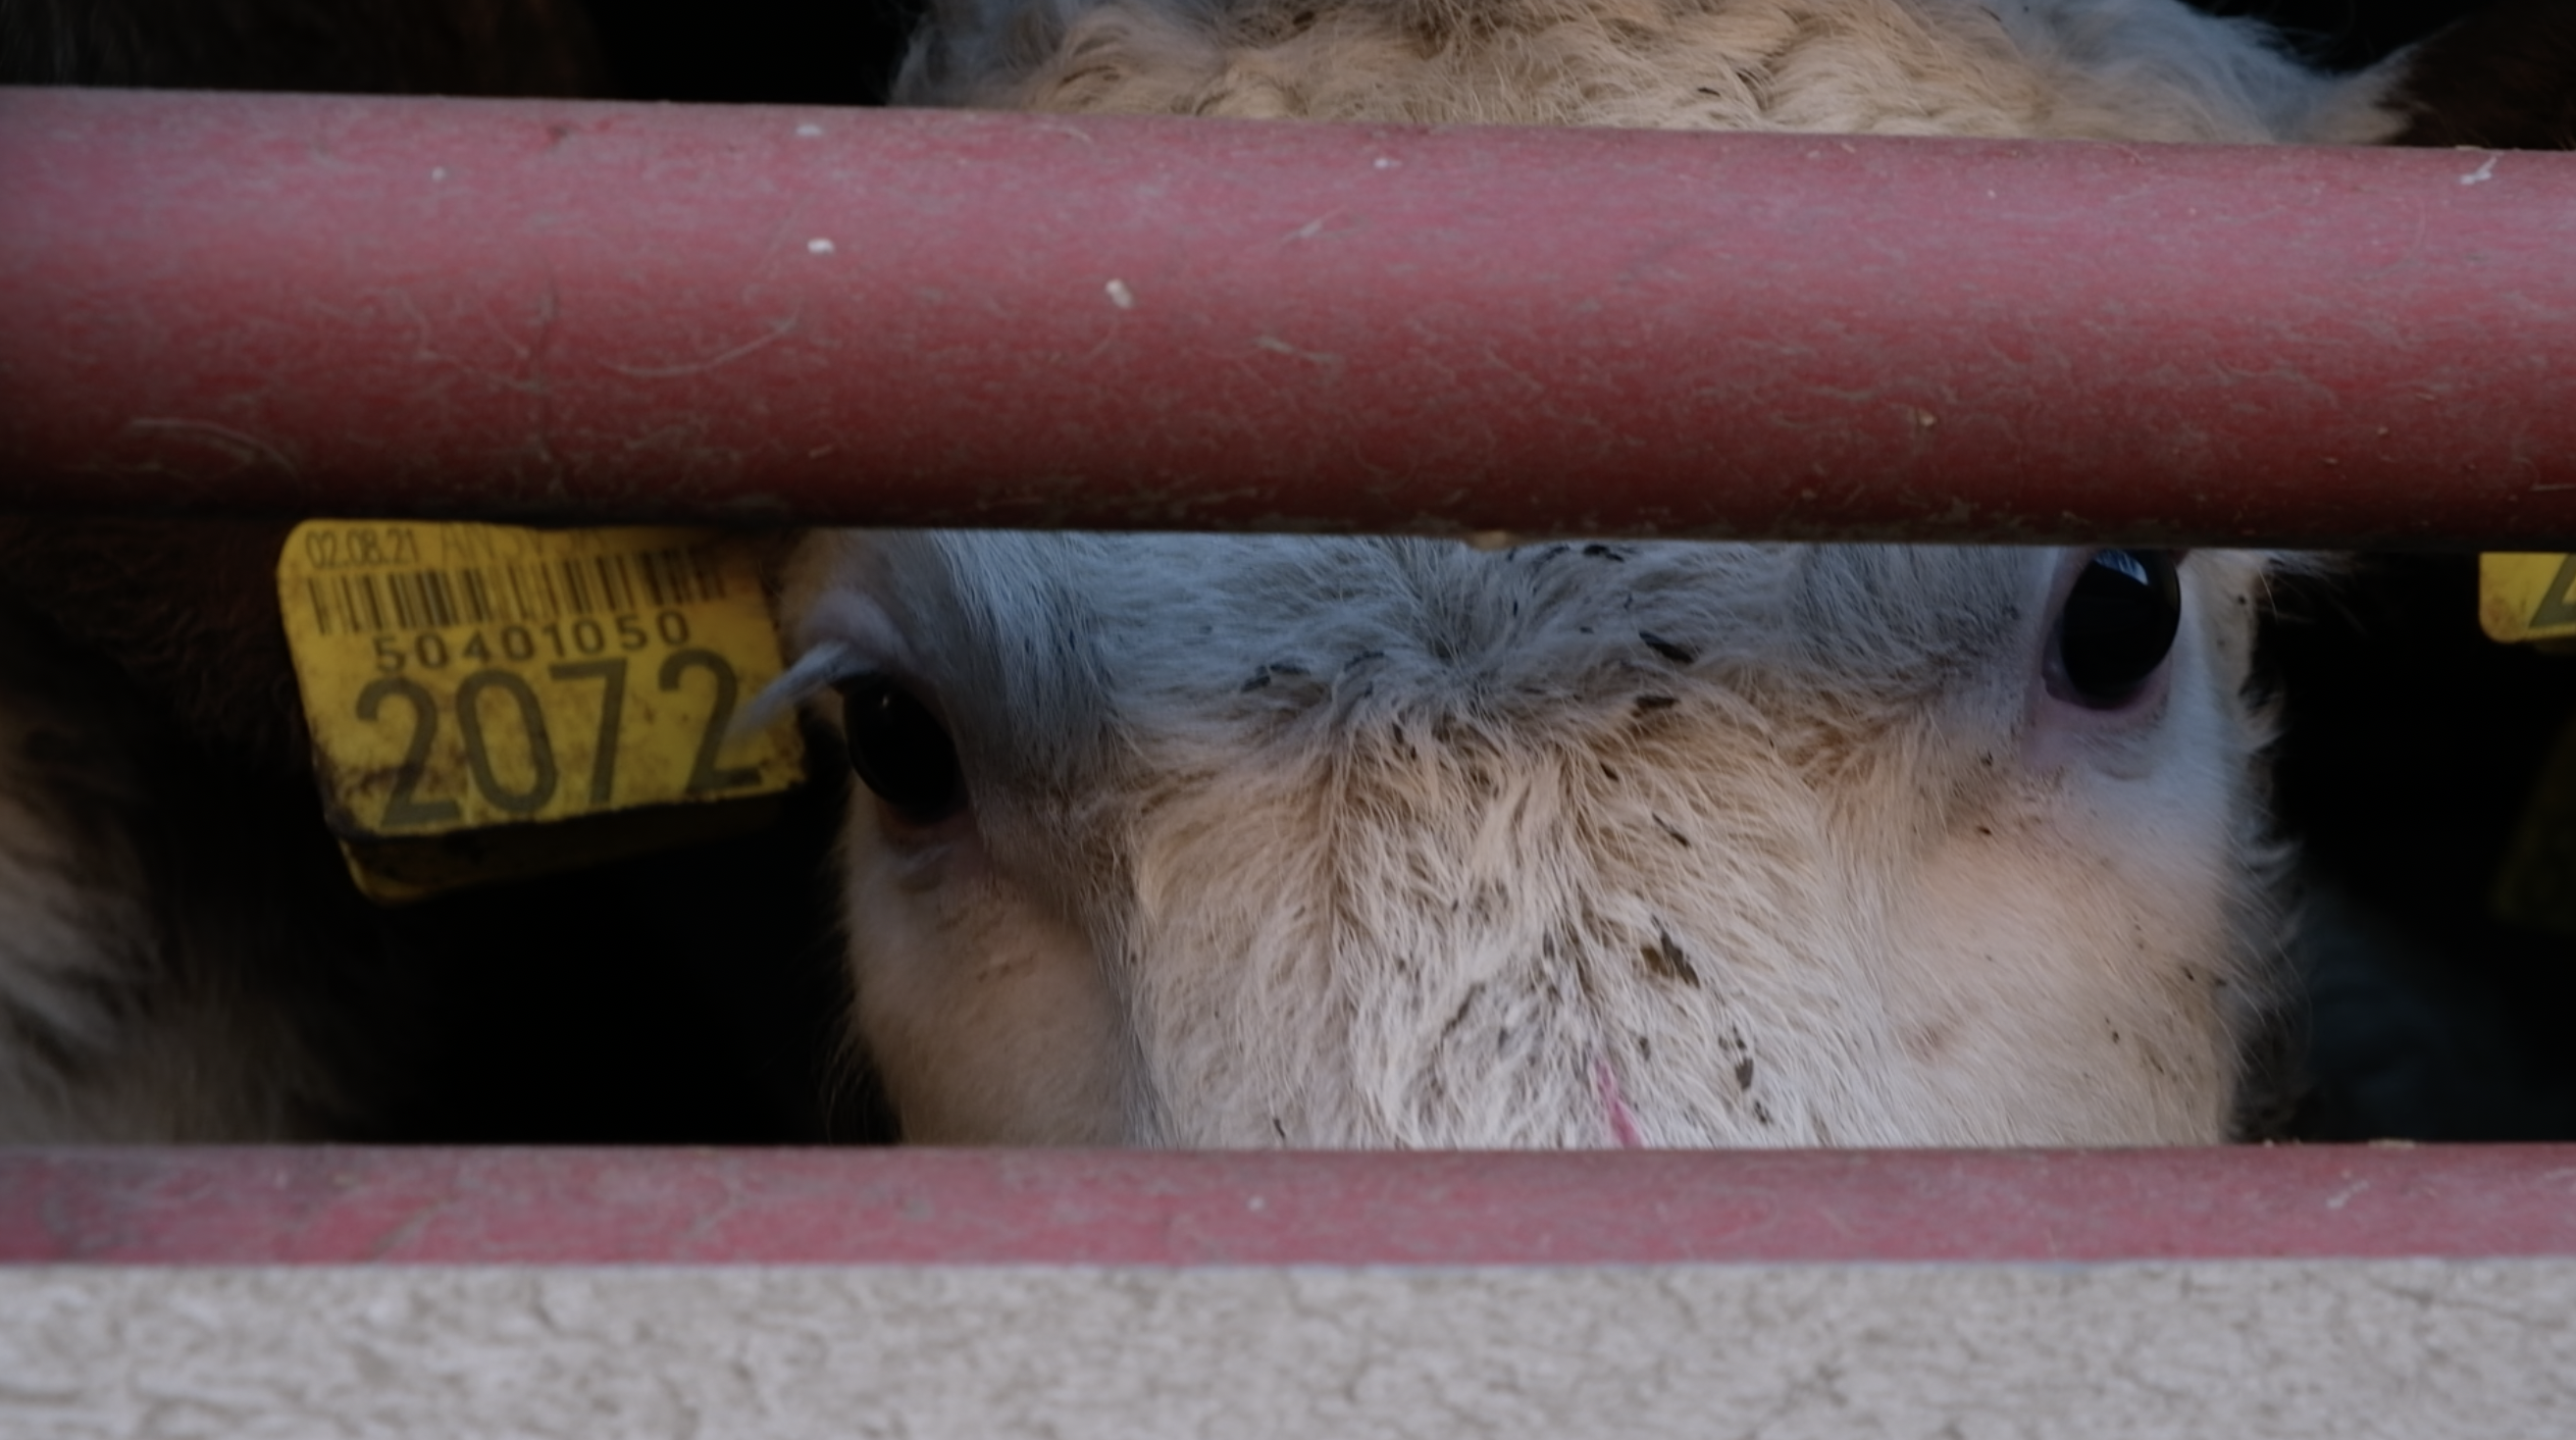 trasporto animali, vitello, sguardo dietro le sbarre